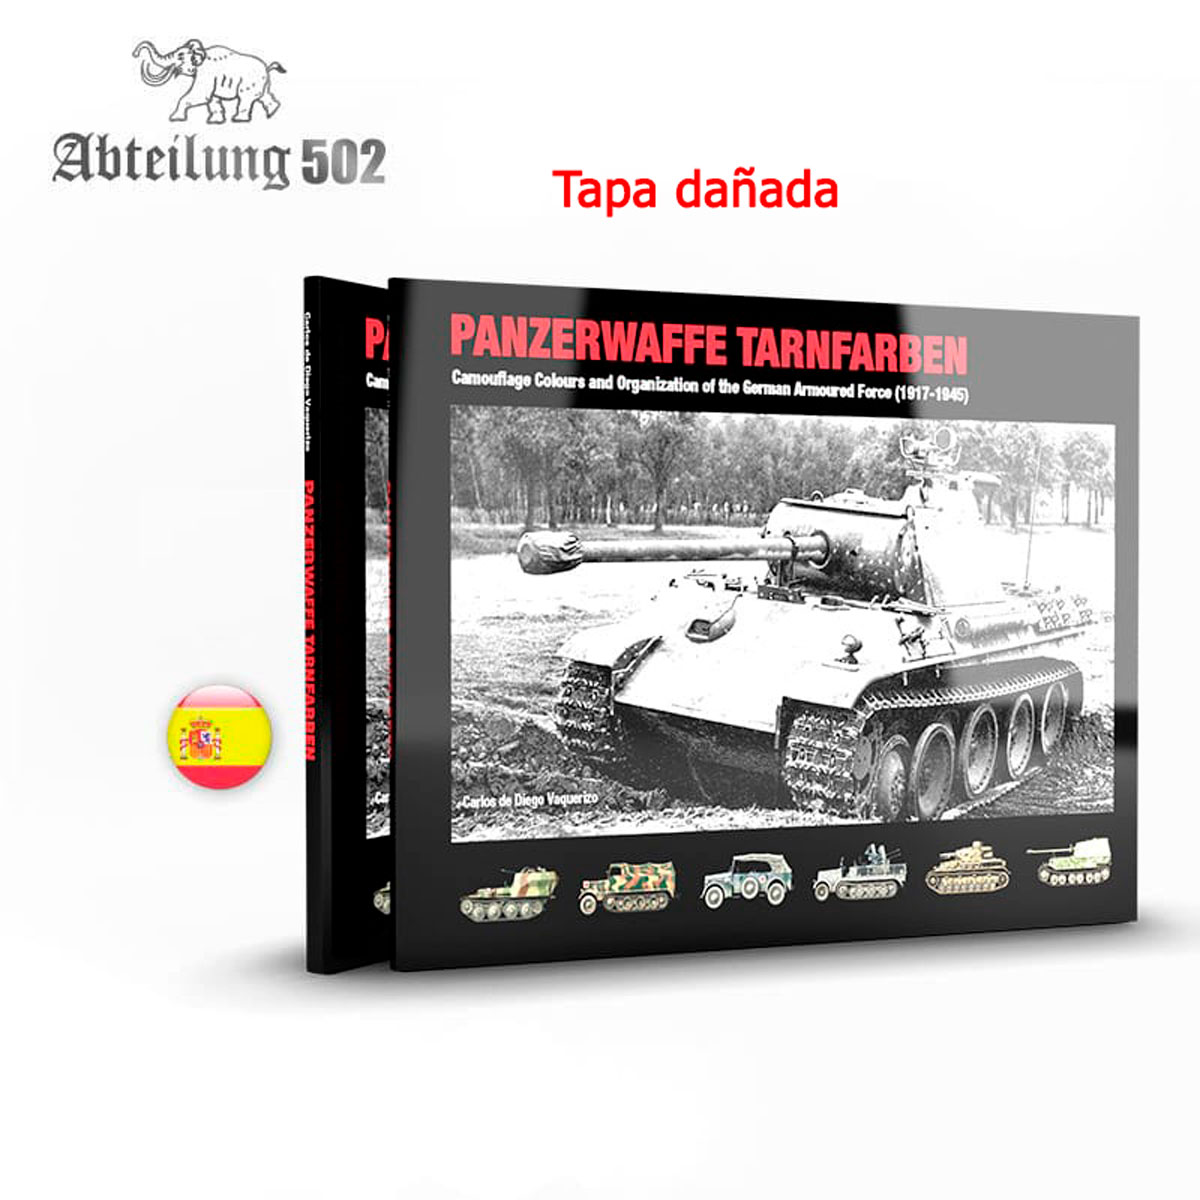 PANZERWAFFE TARNFARBEN – CAMOUFLAGE COLOURS AND ORGANIZATION OF THE GERMAN ARMOURED FORCE (1917-1945) (Tapa dañada)